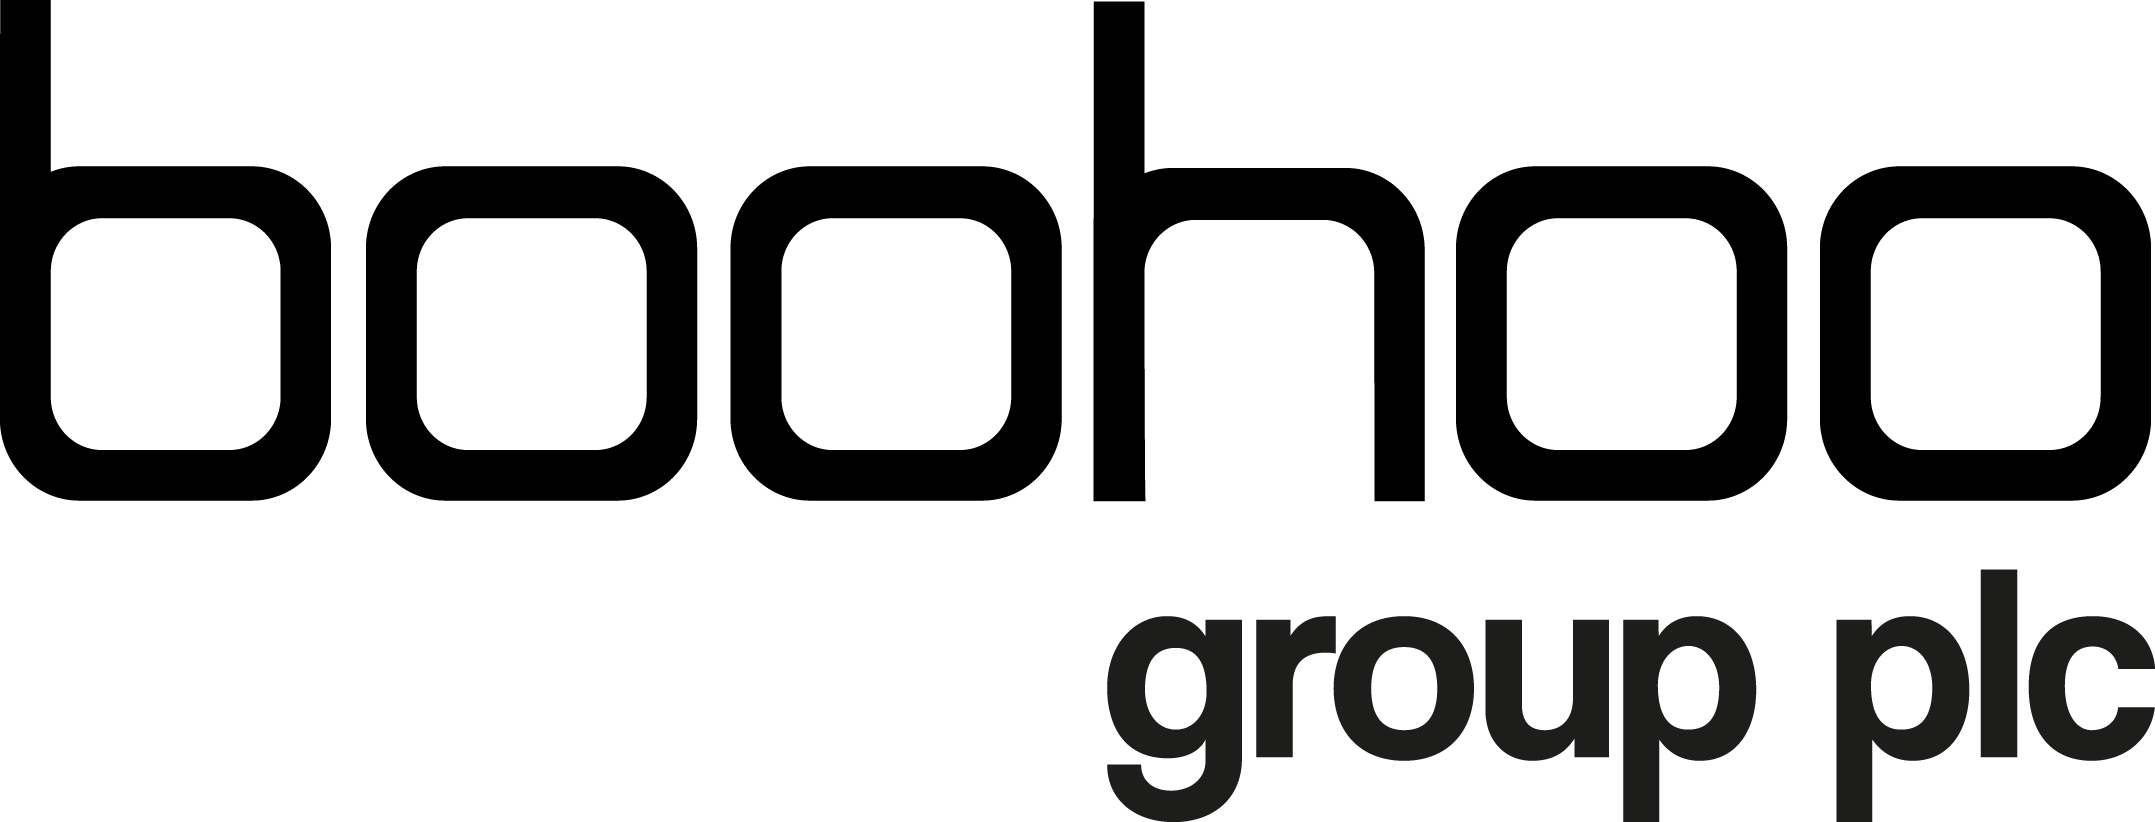 Boohoo Group